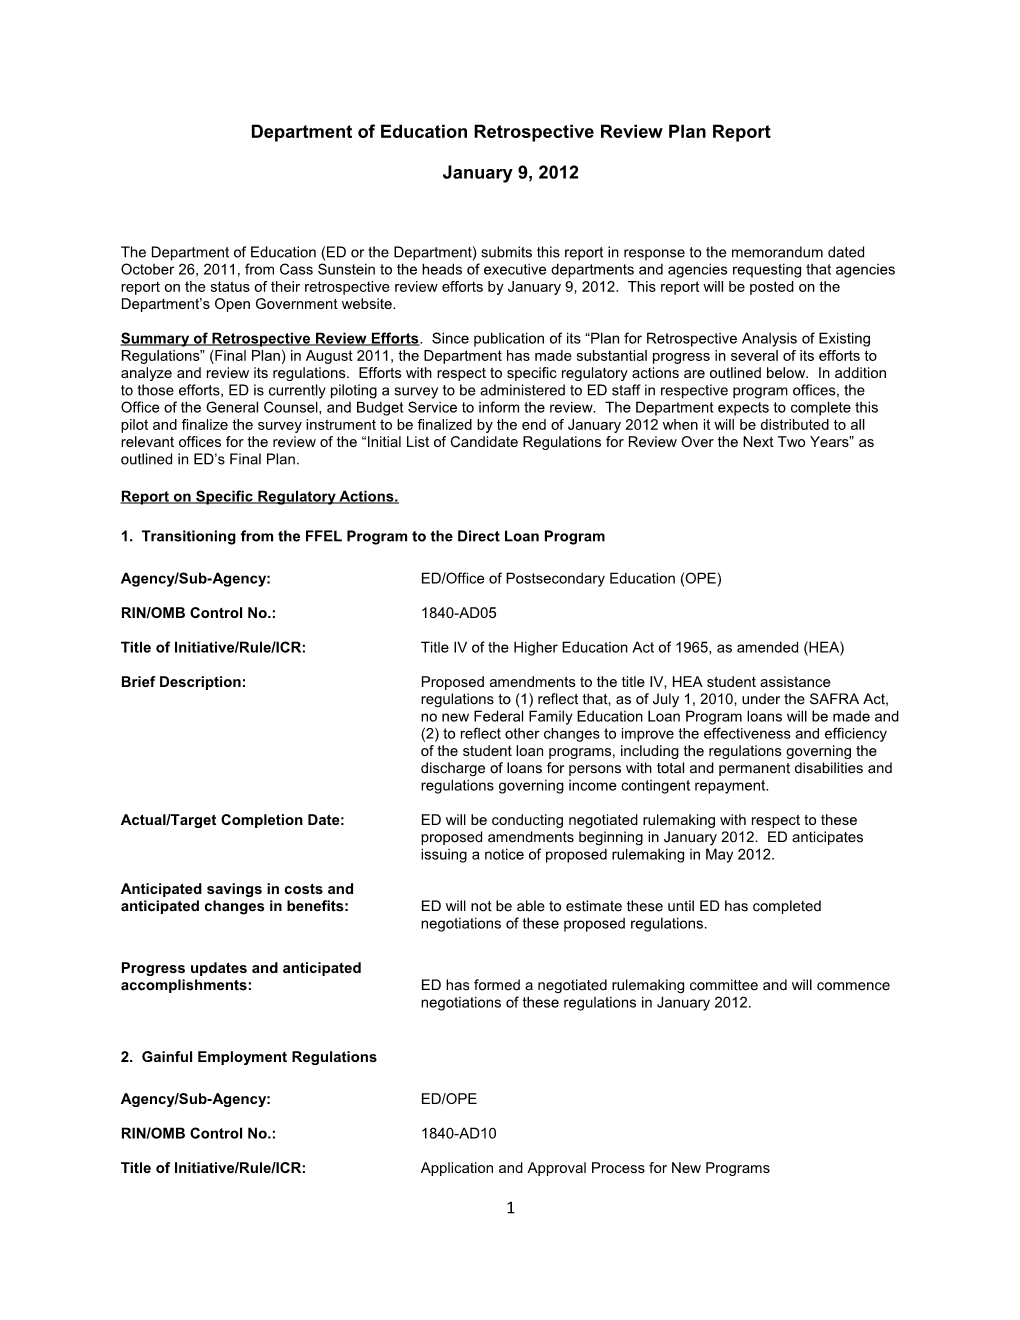 Department of Education Retrospective Review Plan Report January 2012 (PDF)